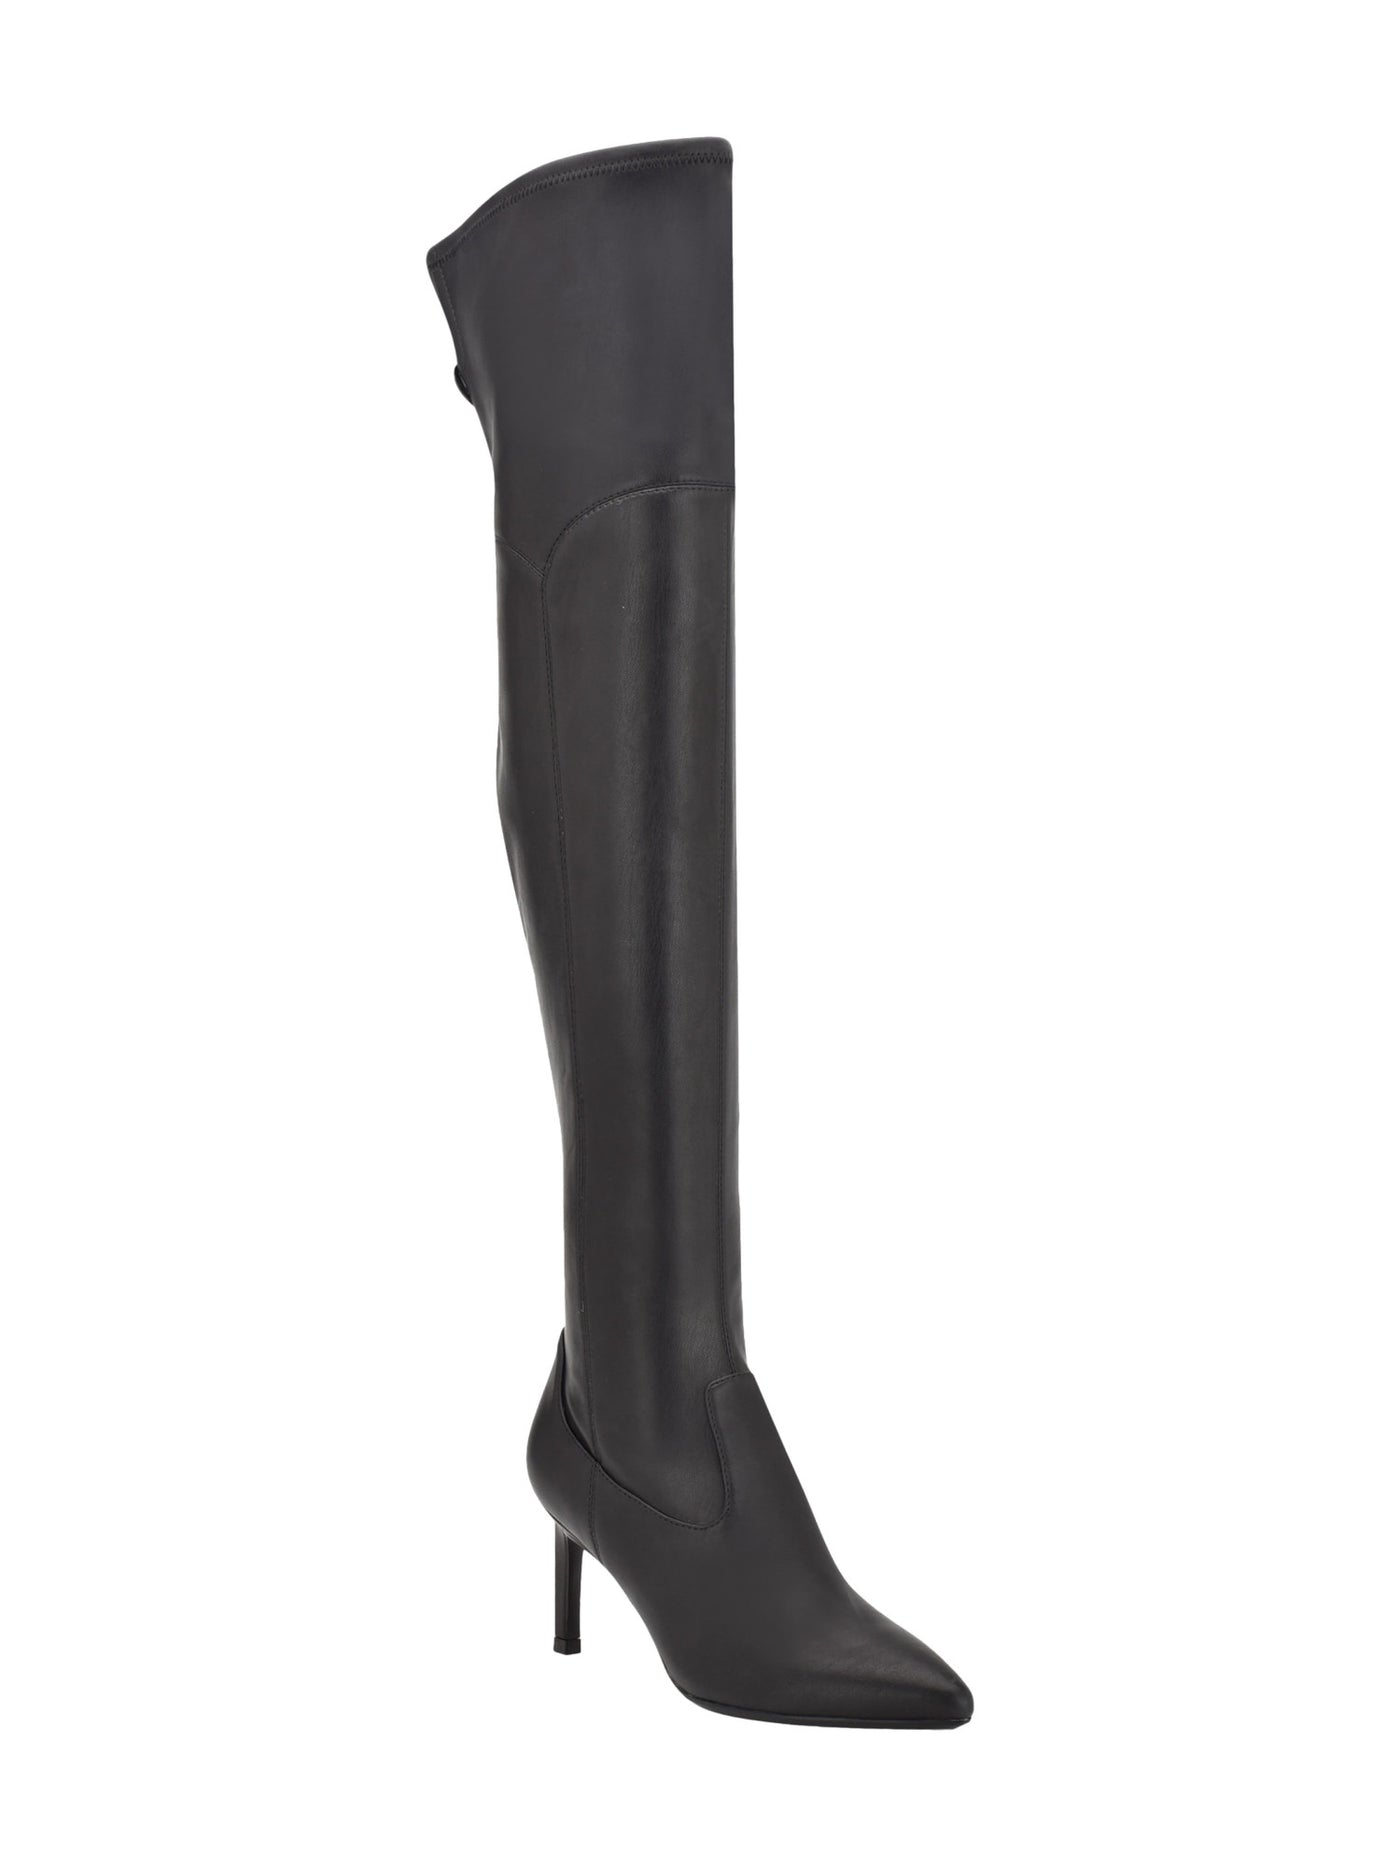 CALVIN KLEIN Womens Black Goring Padded Sacha Pointy Toe Stiletto Zip-Up Dress Boots 9.5 M